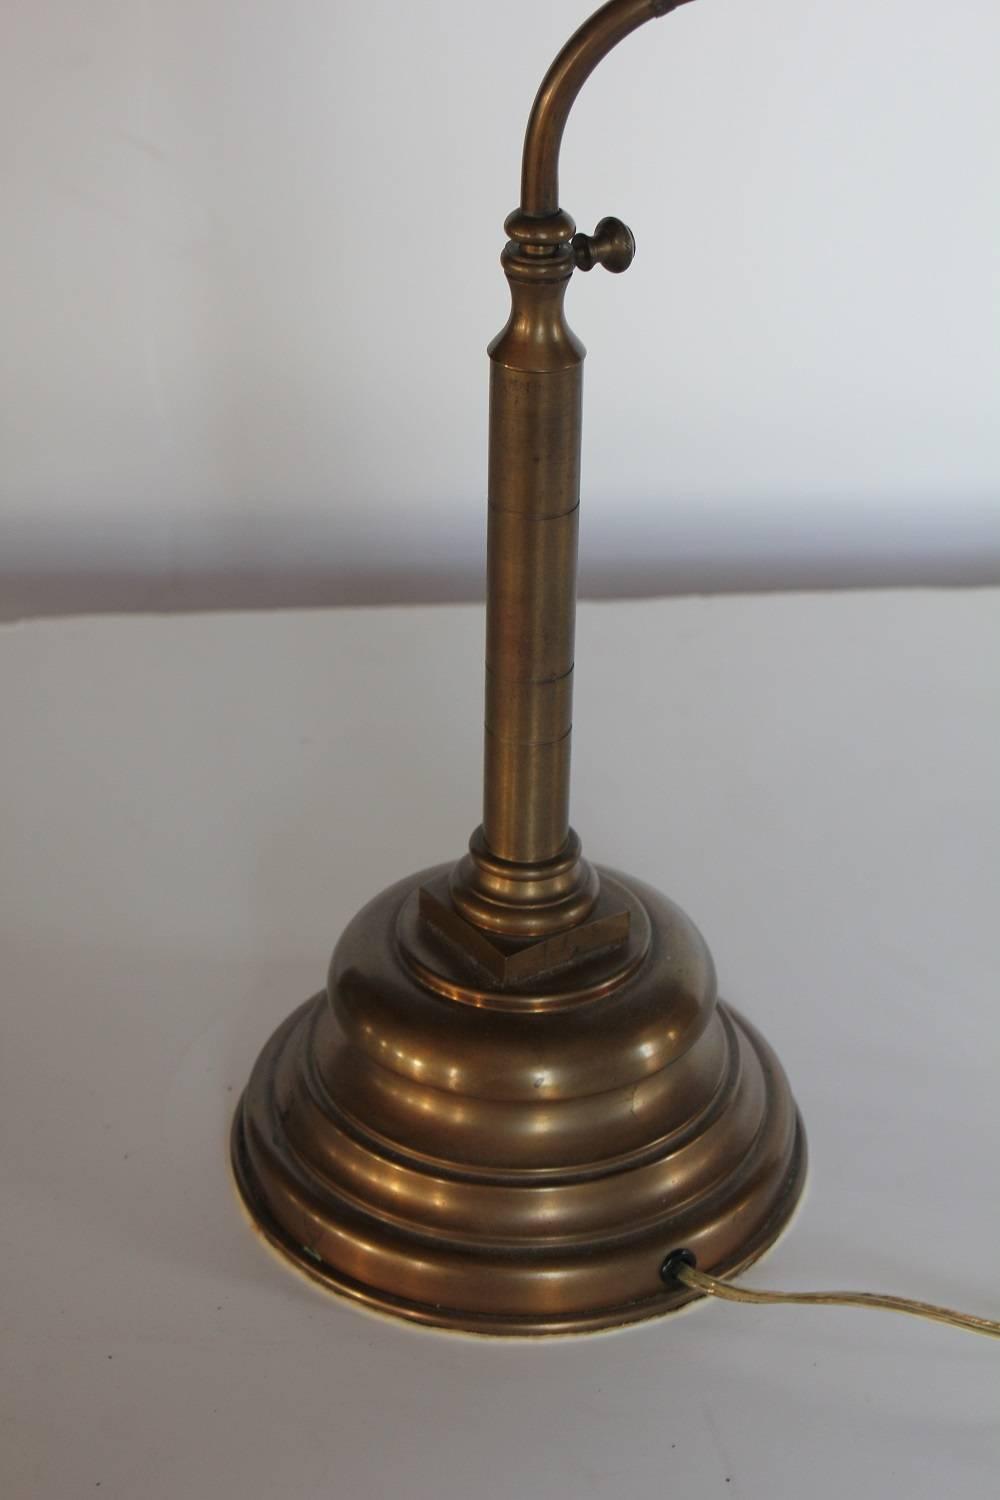 Antique Italian Bronze Desk Lamp For Sale at 1stdibs